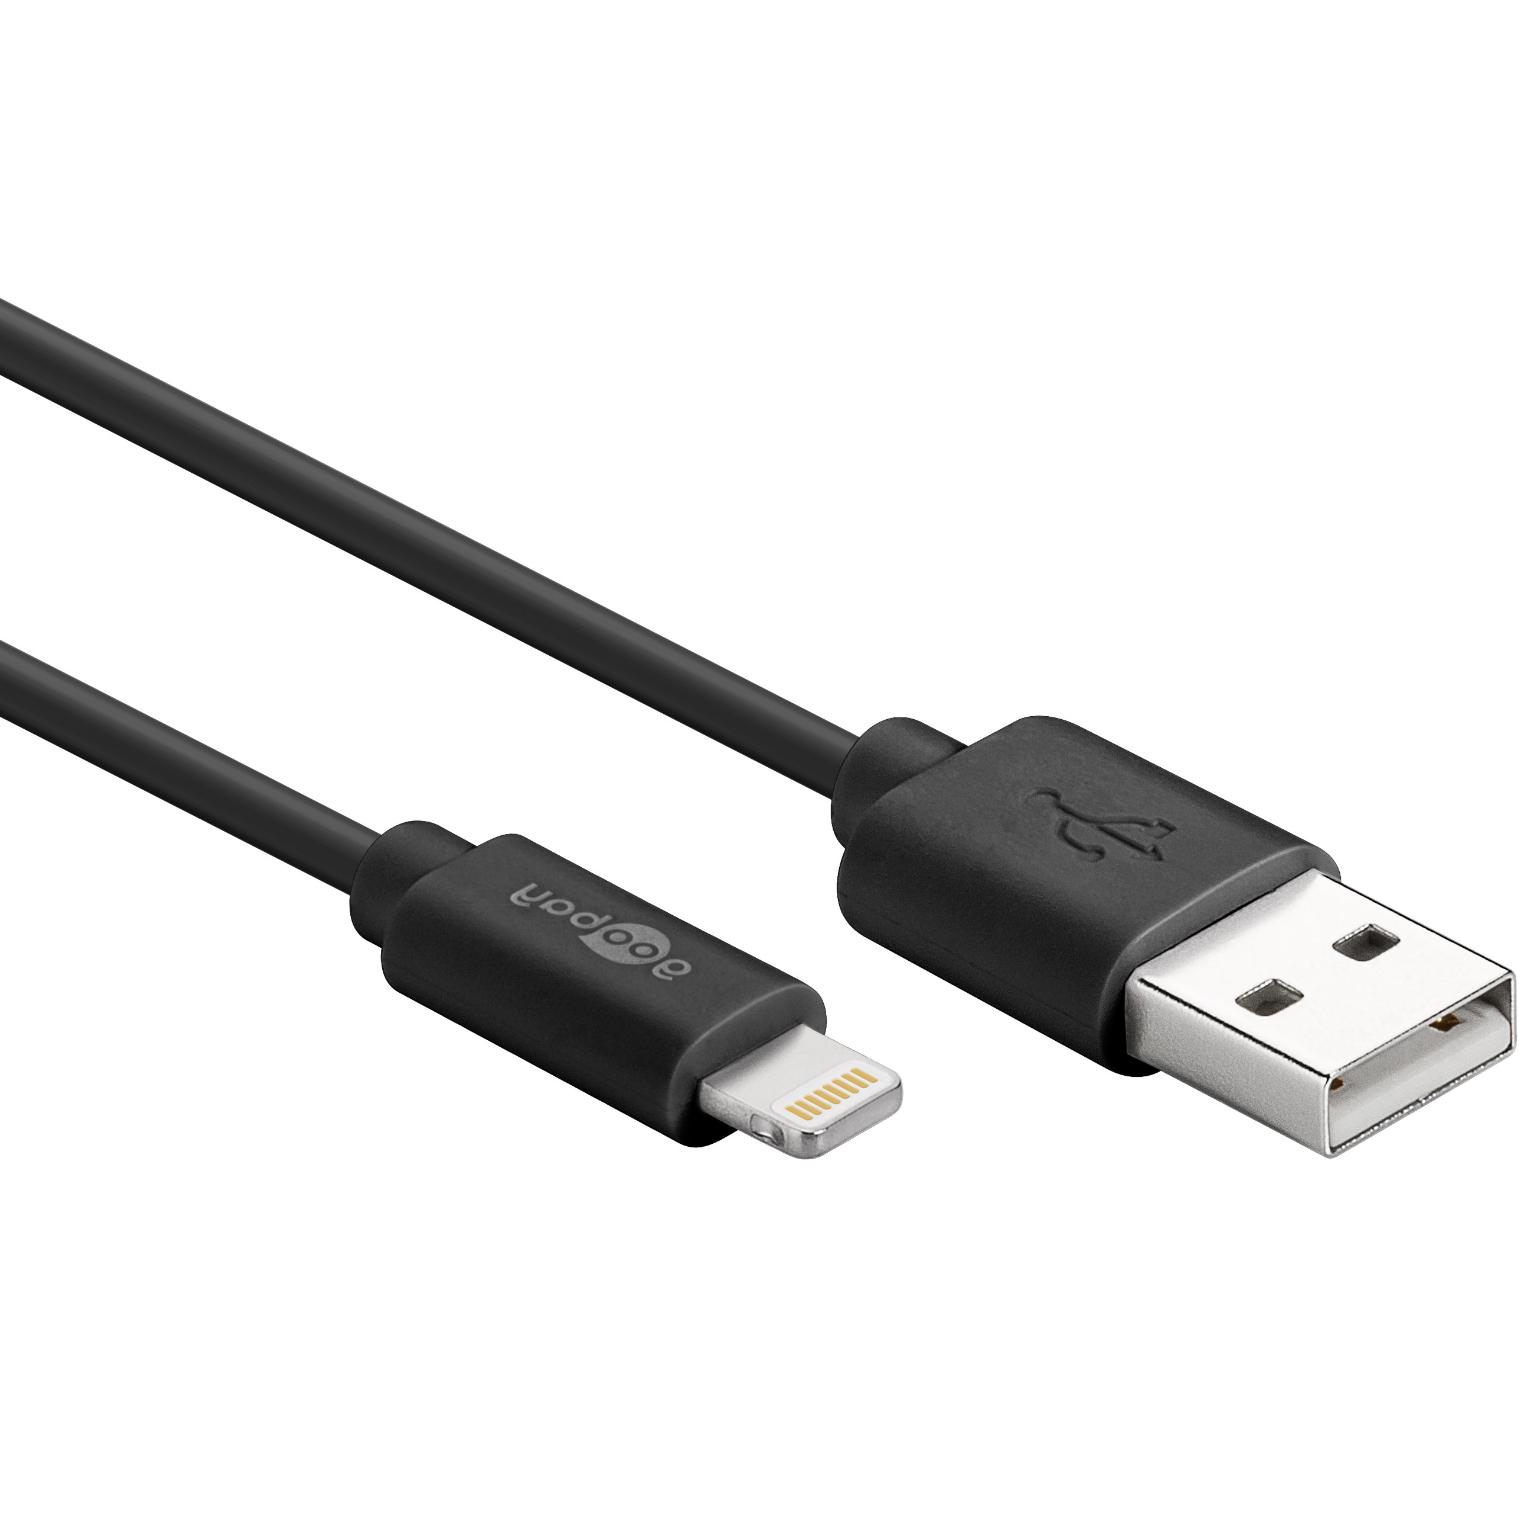 USB Lightning datakabel - 0.5 meter - Zwart - Goobay